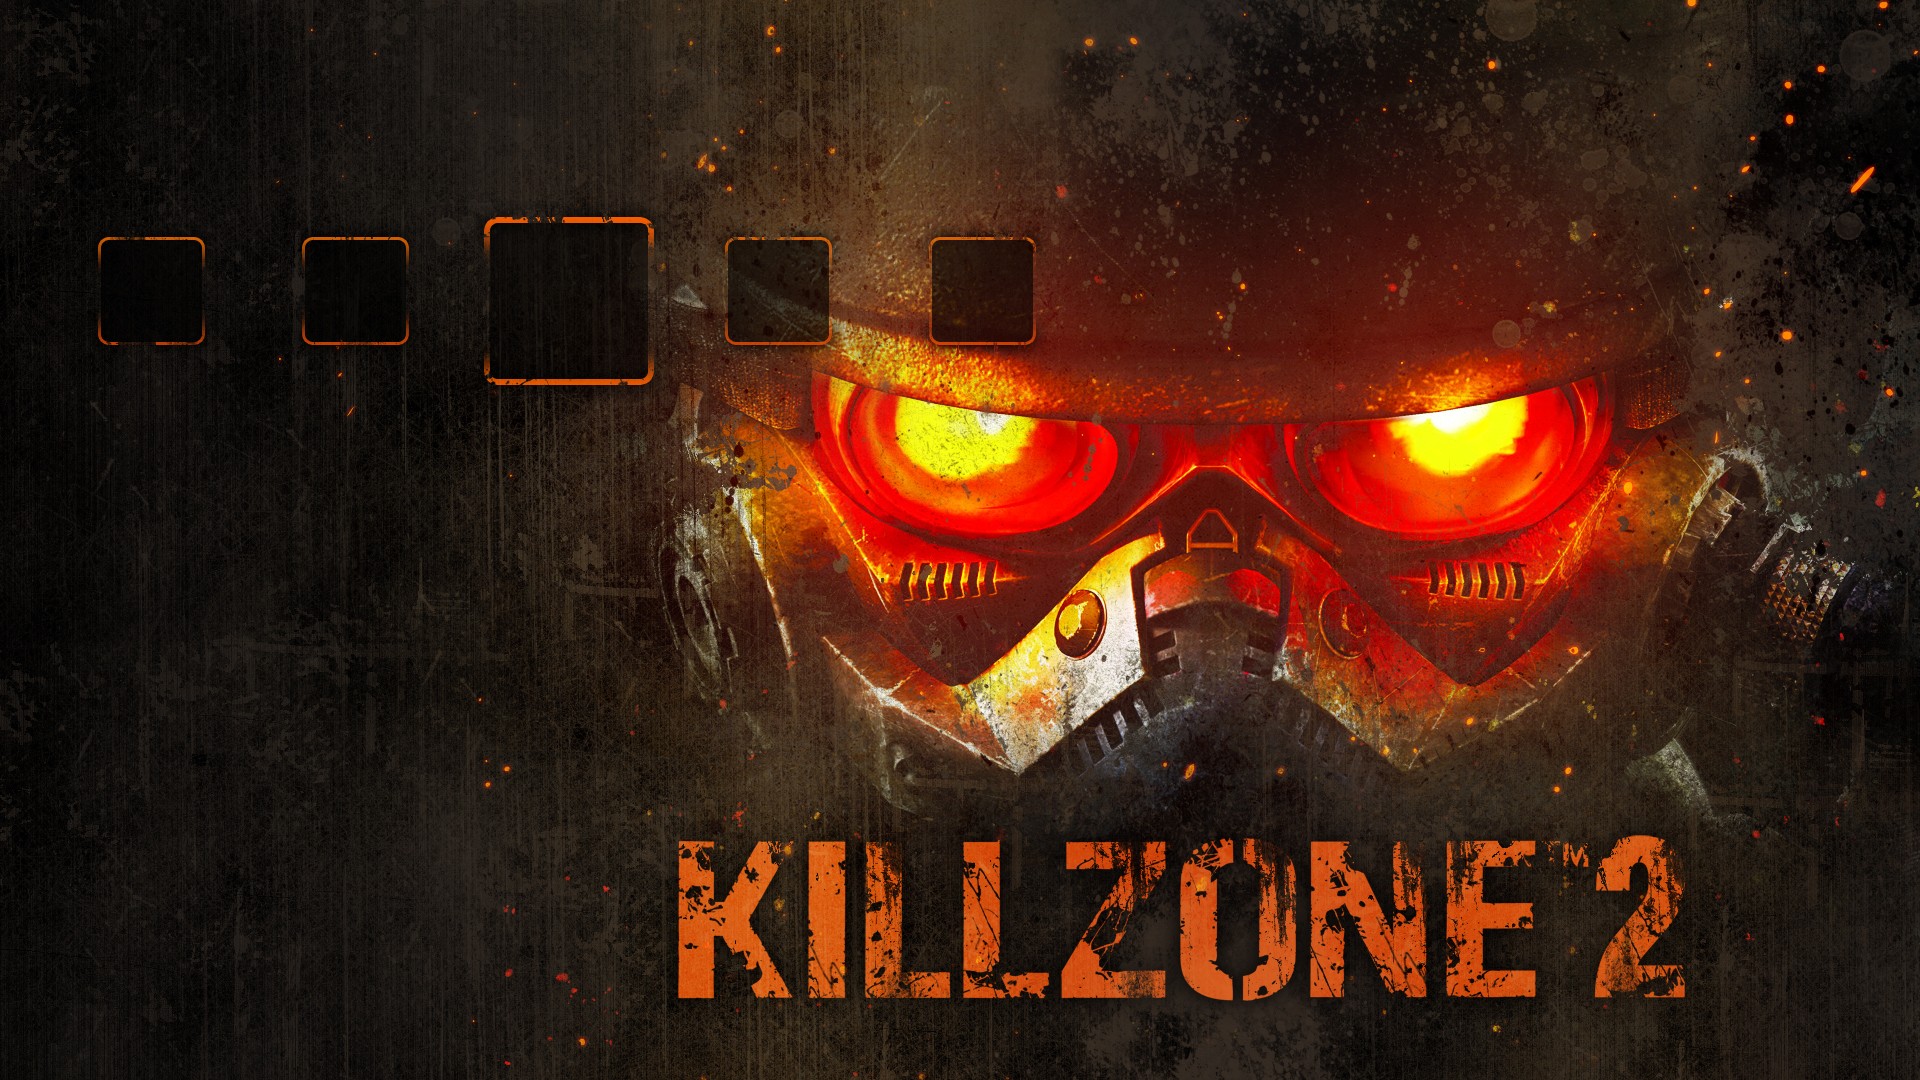 Killzone 2 Wallpaper